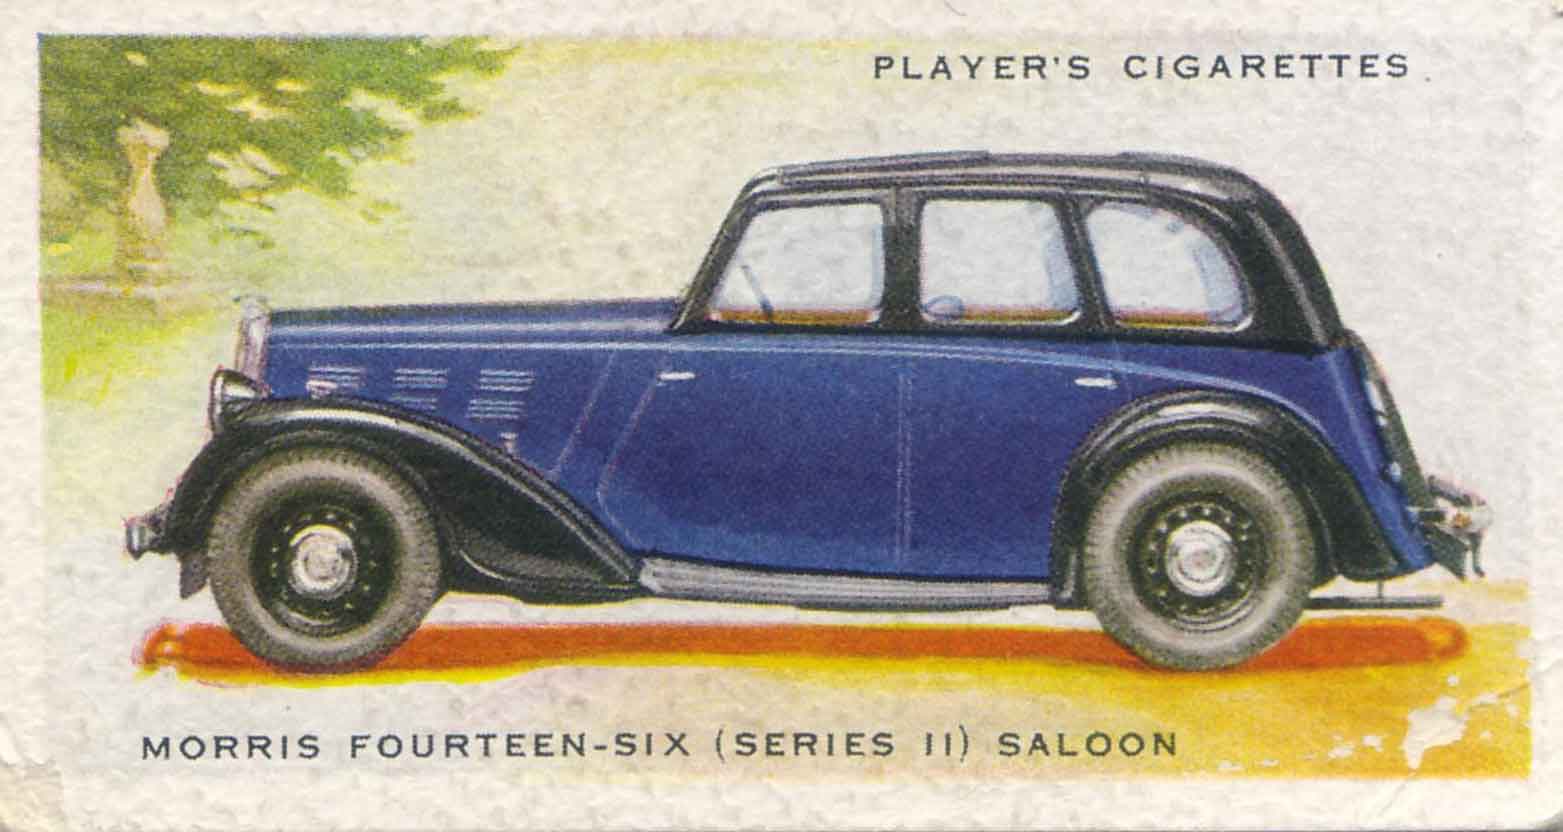 Morris Fourteen-Six. 1937 cigarette card.